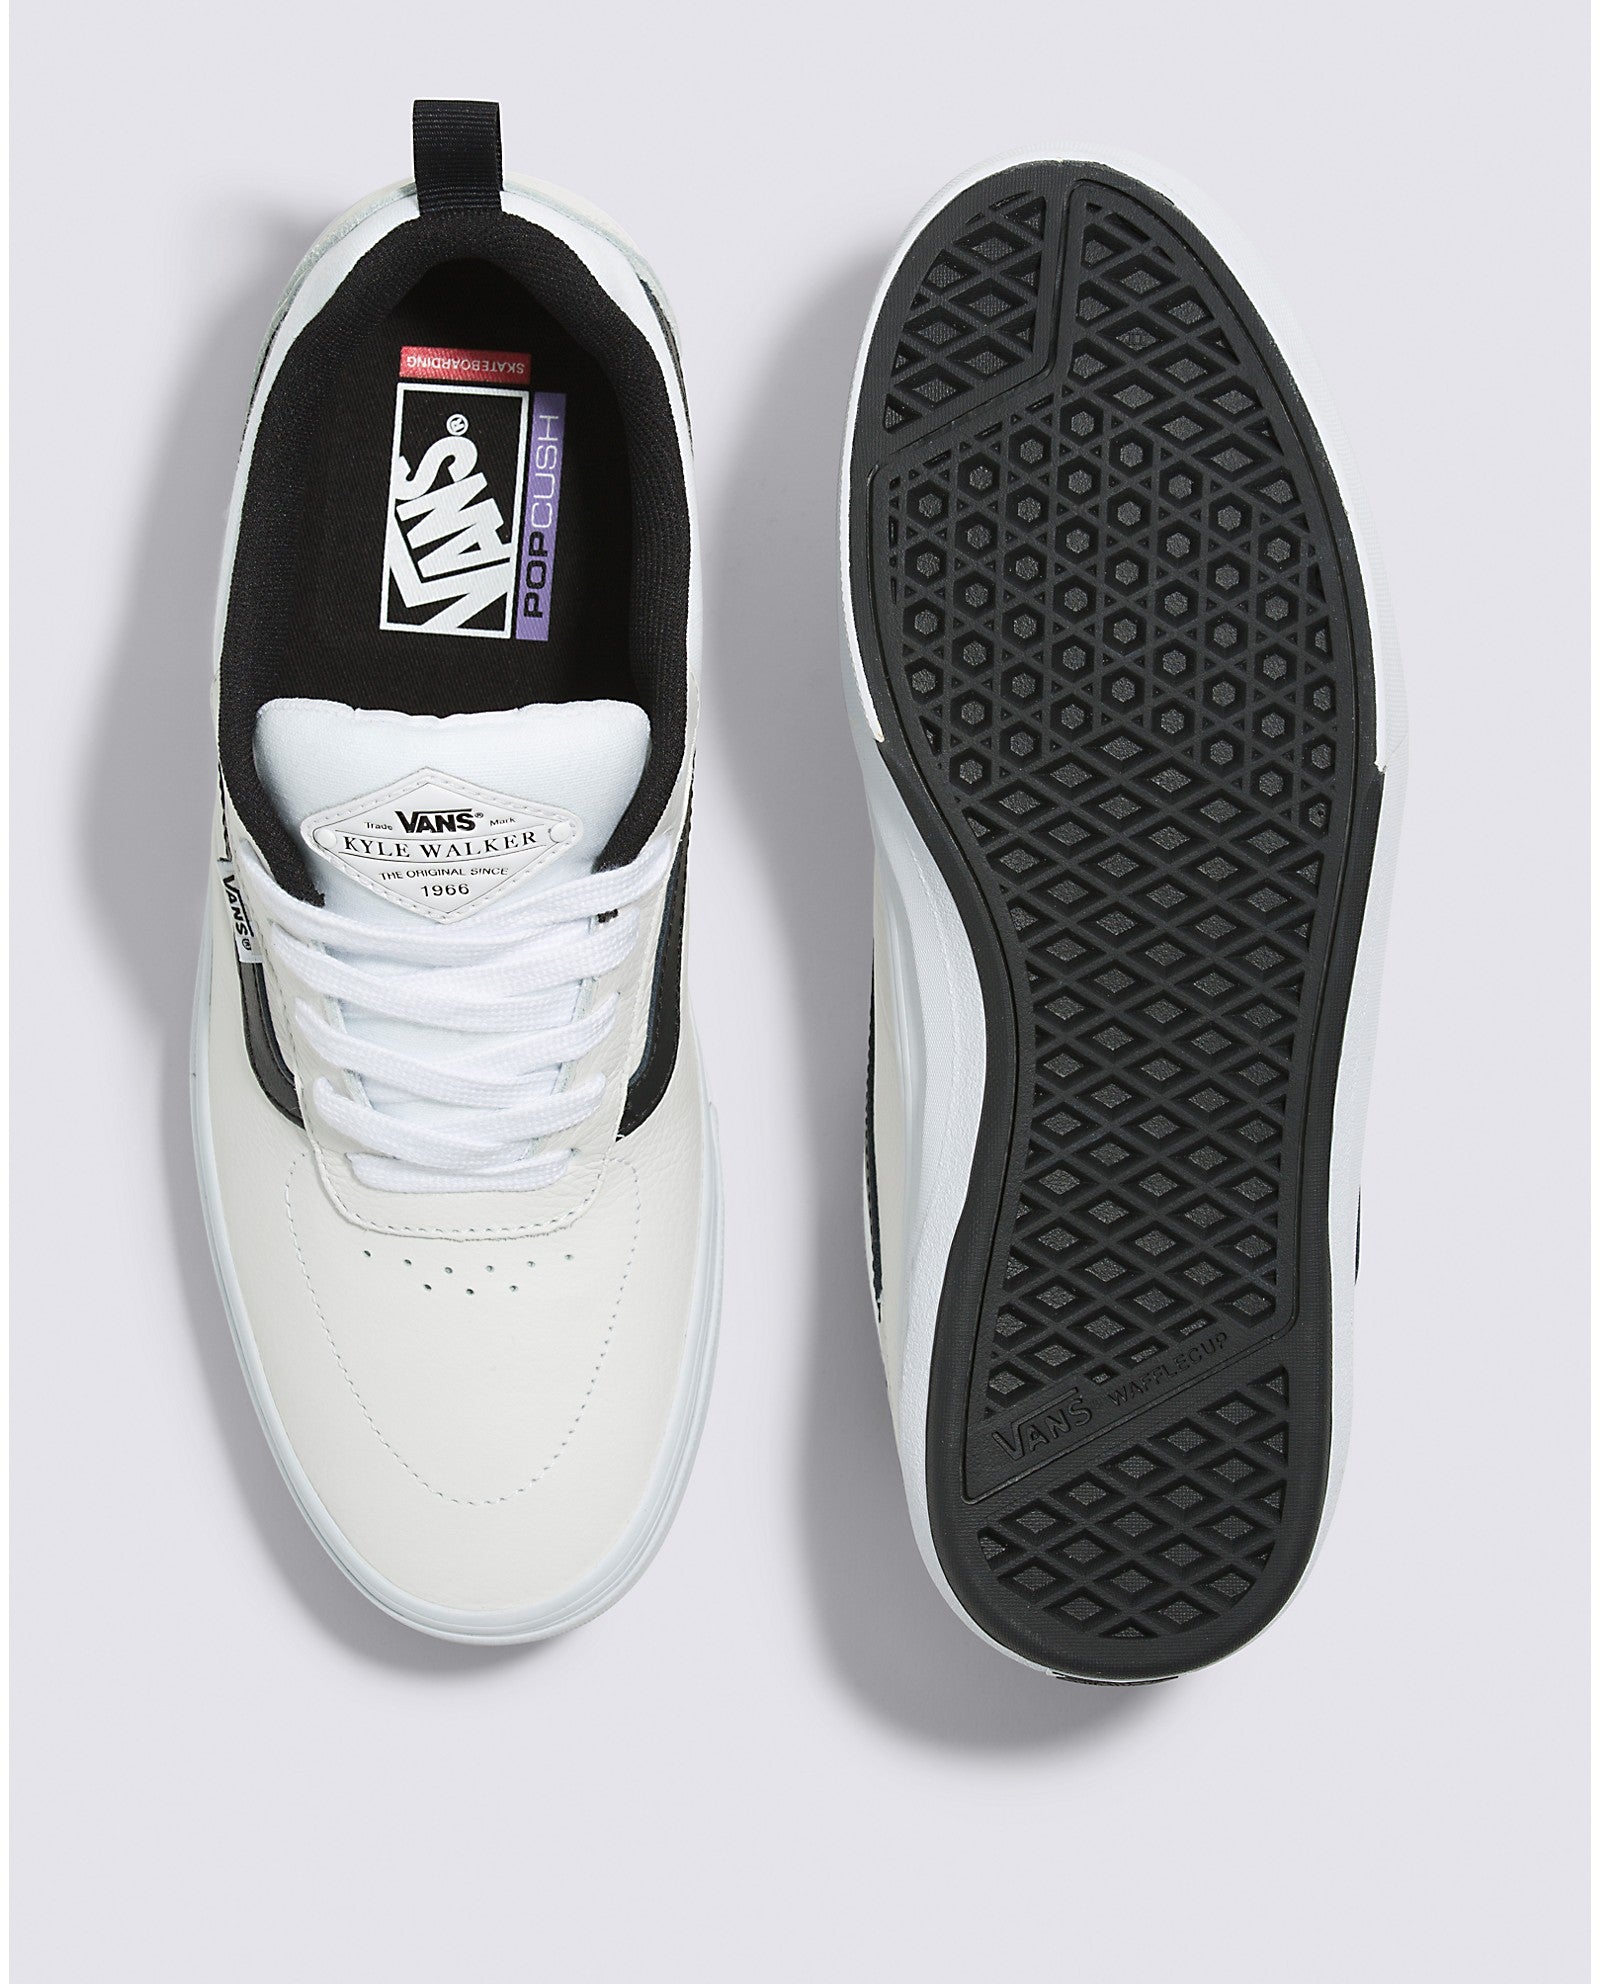 True White Leather Kyle Walker Vans Skate Shoe Top/Bottom